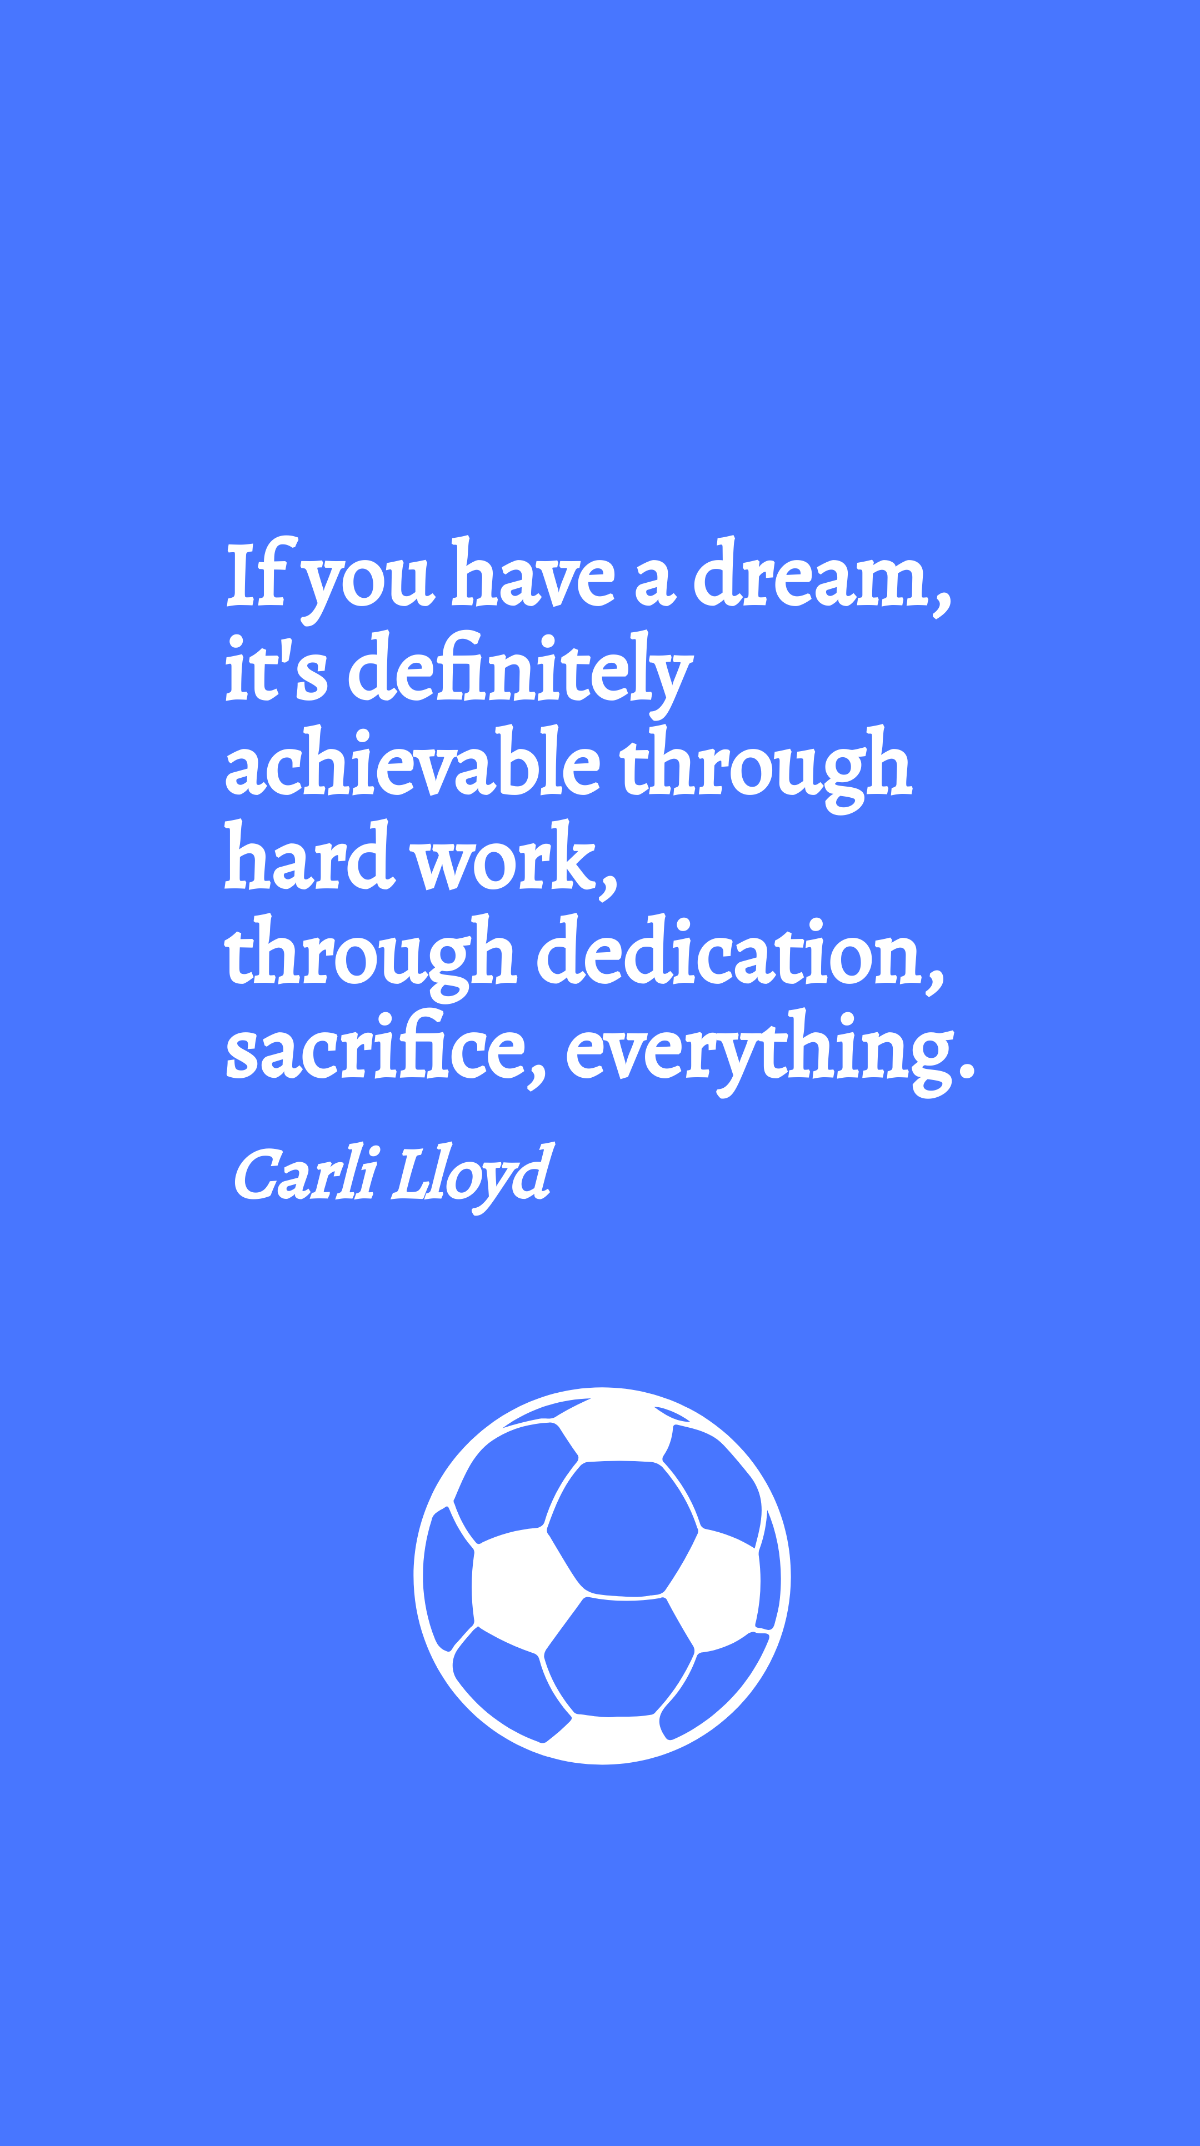 Carli Lloyd - If you have a dream, it's definitely achievable through hard work, through dedication, sacrifice, everything.